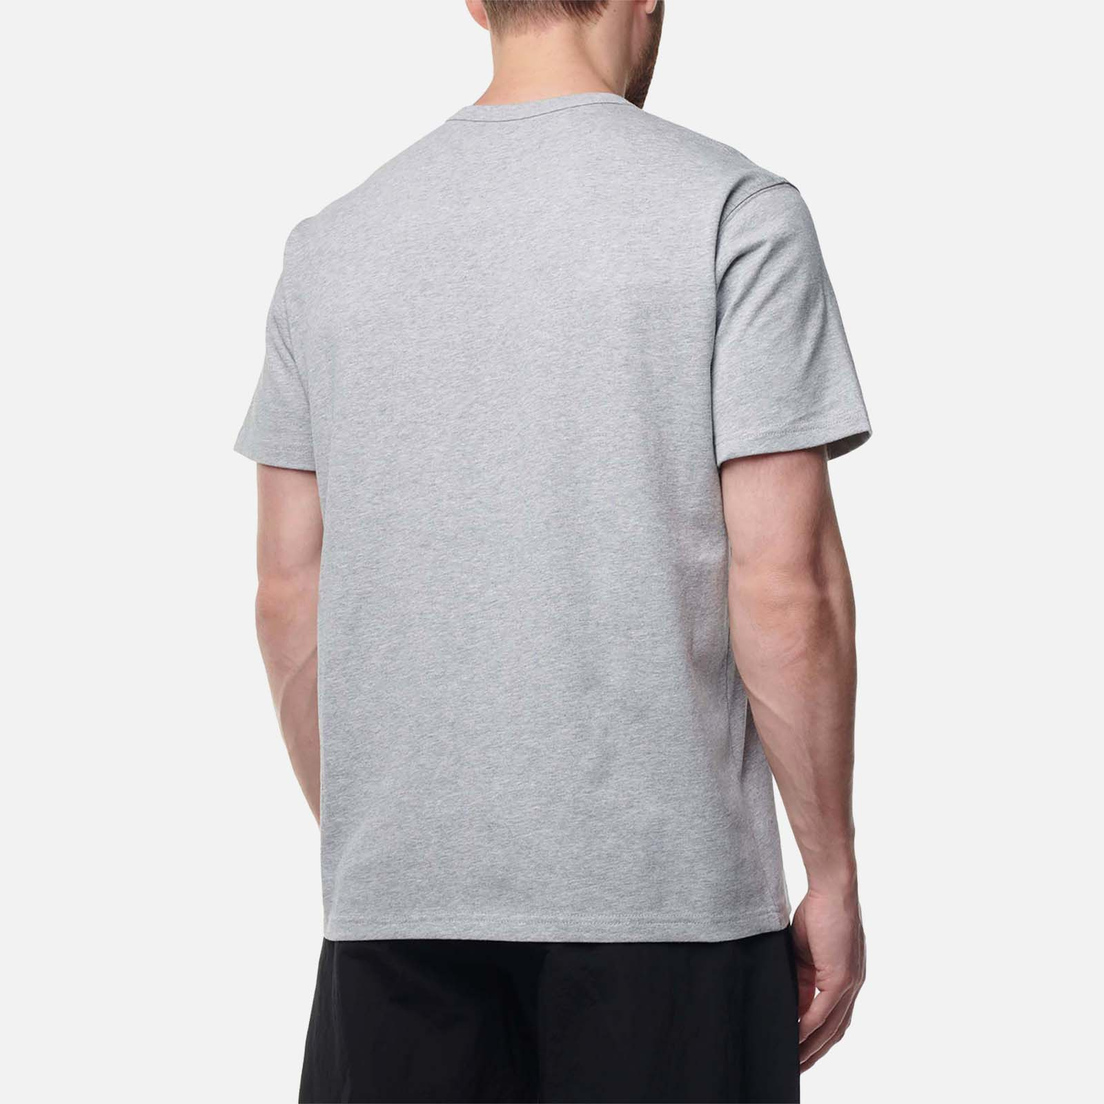 FrizmWORKS Комплект мужских футболок 2-Pack OG Athletic